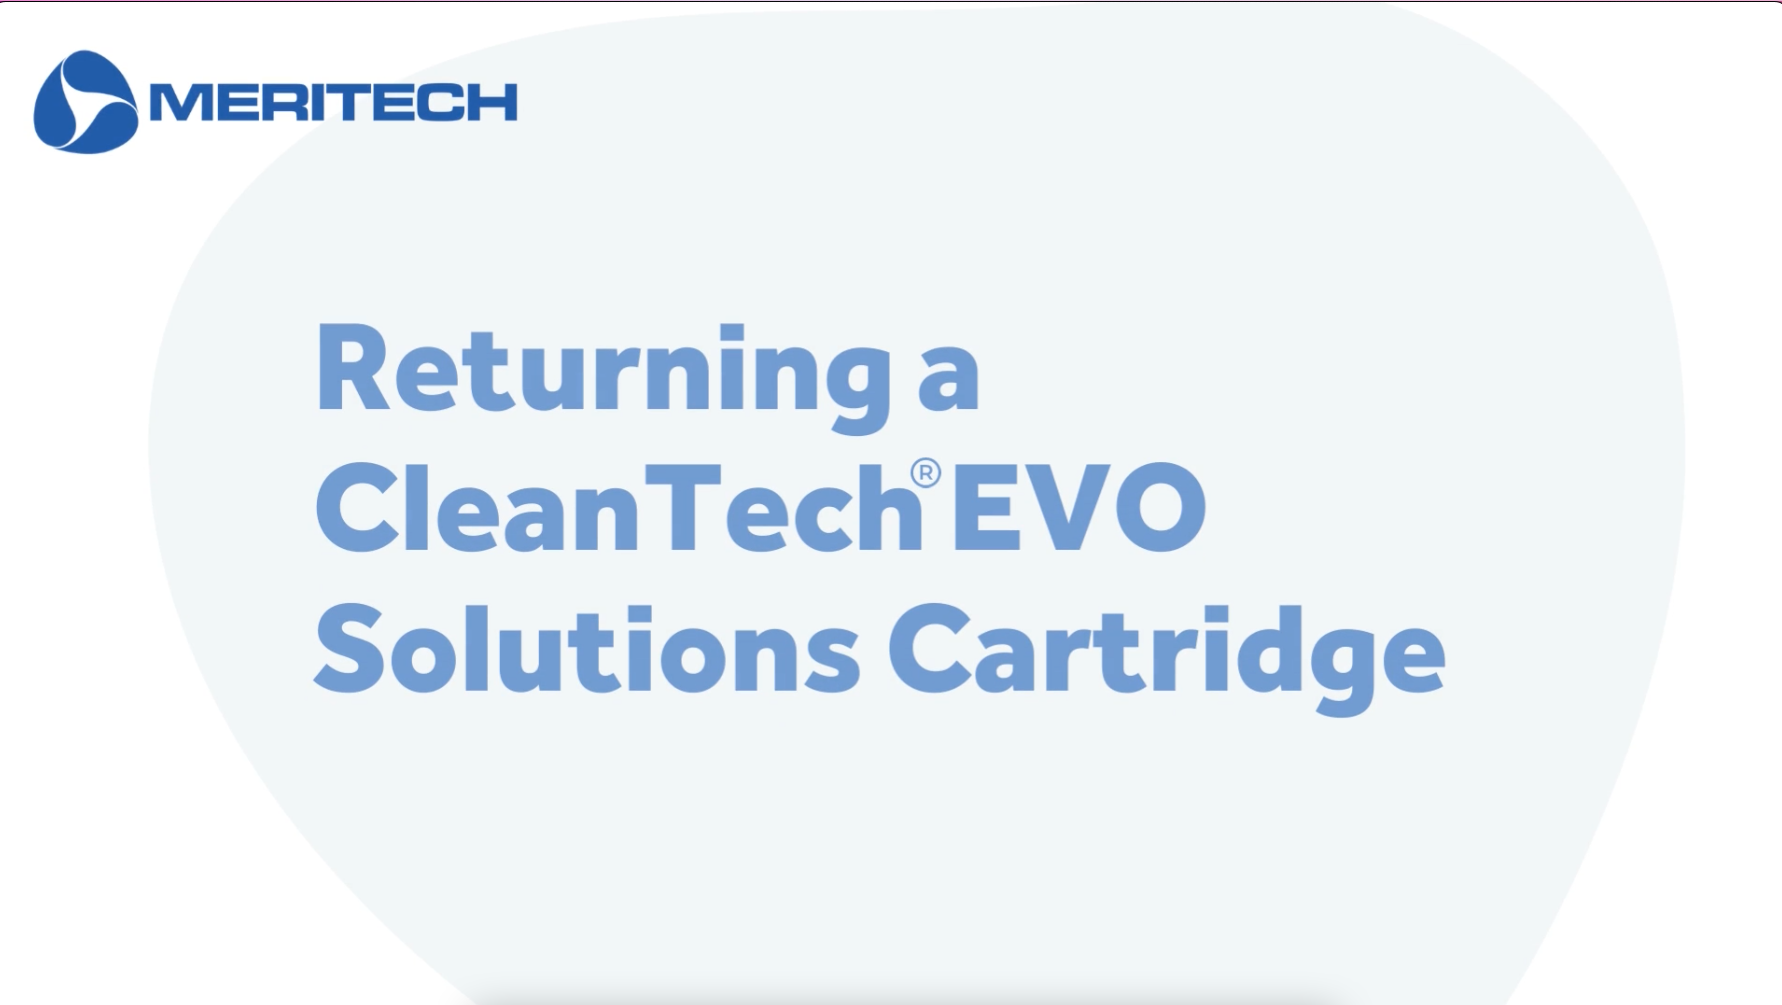 Meritech's EVO Cartridge Return Program